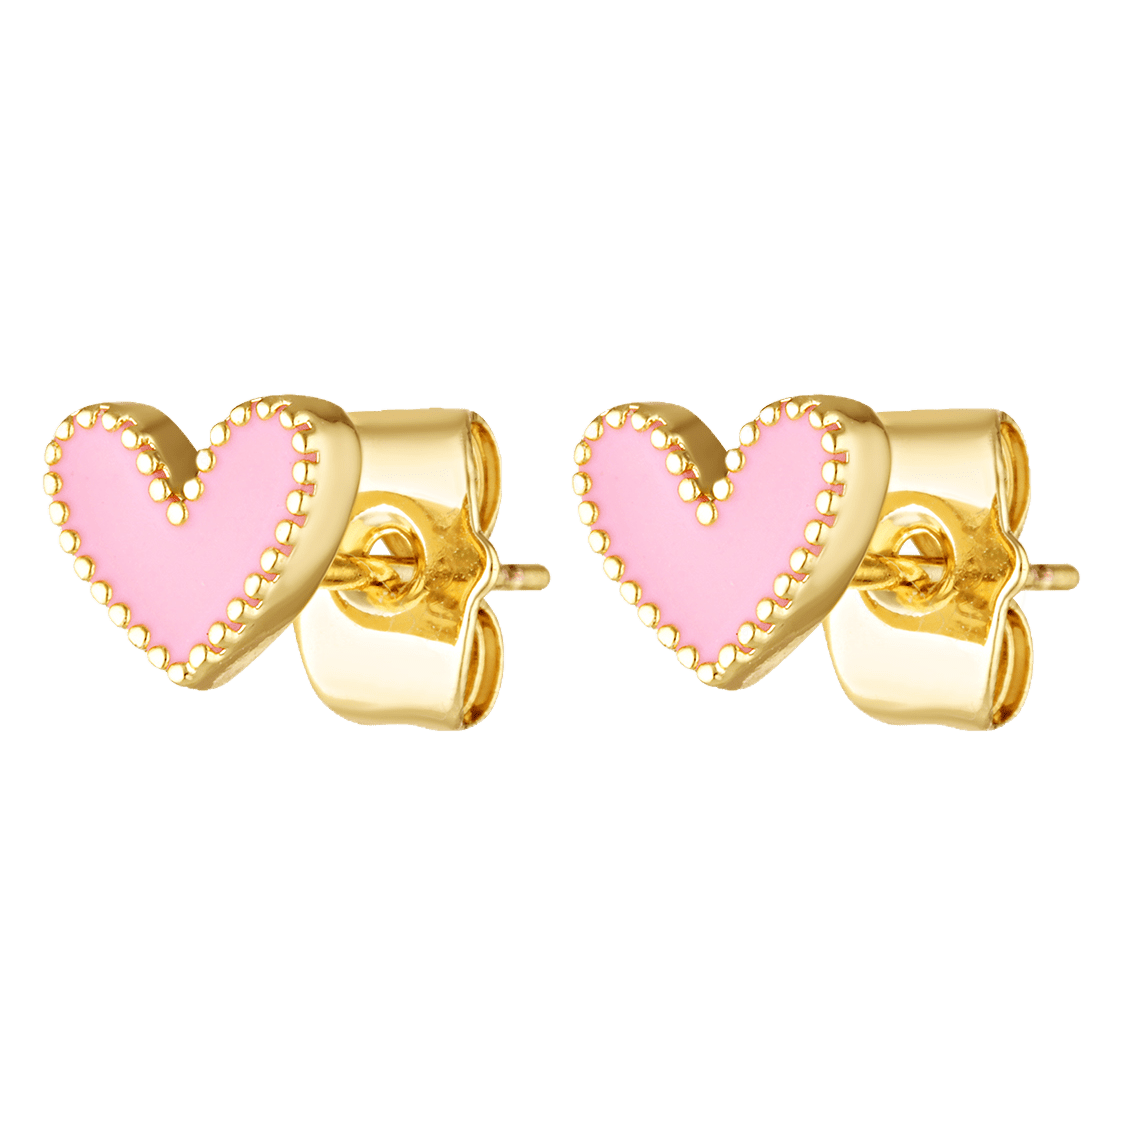 Cute pink heart shaped enamel and gold fill earrings